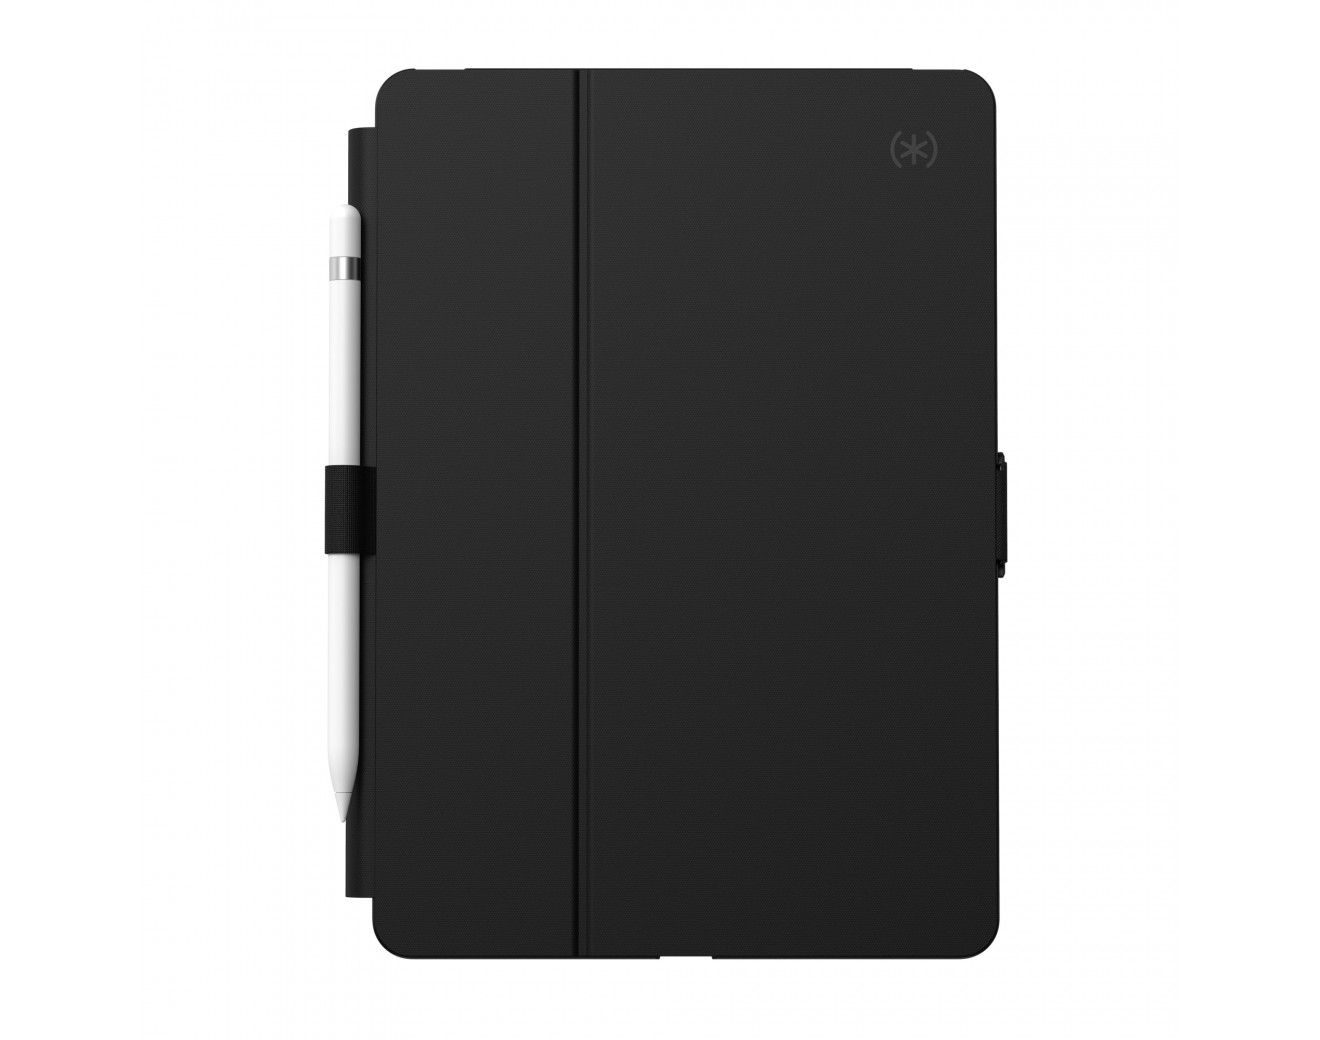 Калъф Speck 10.2-Inch iPad Balance Folio iPad Cases - Black